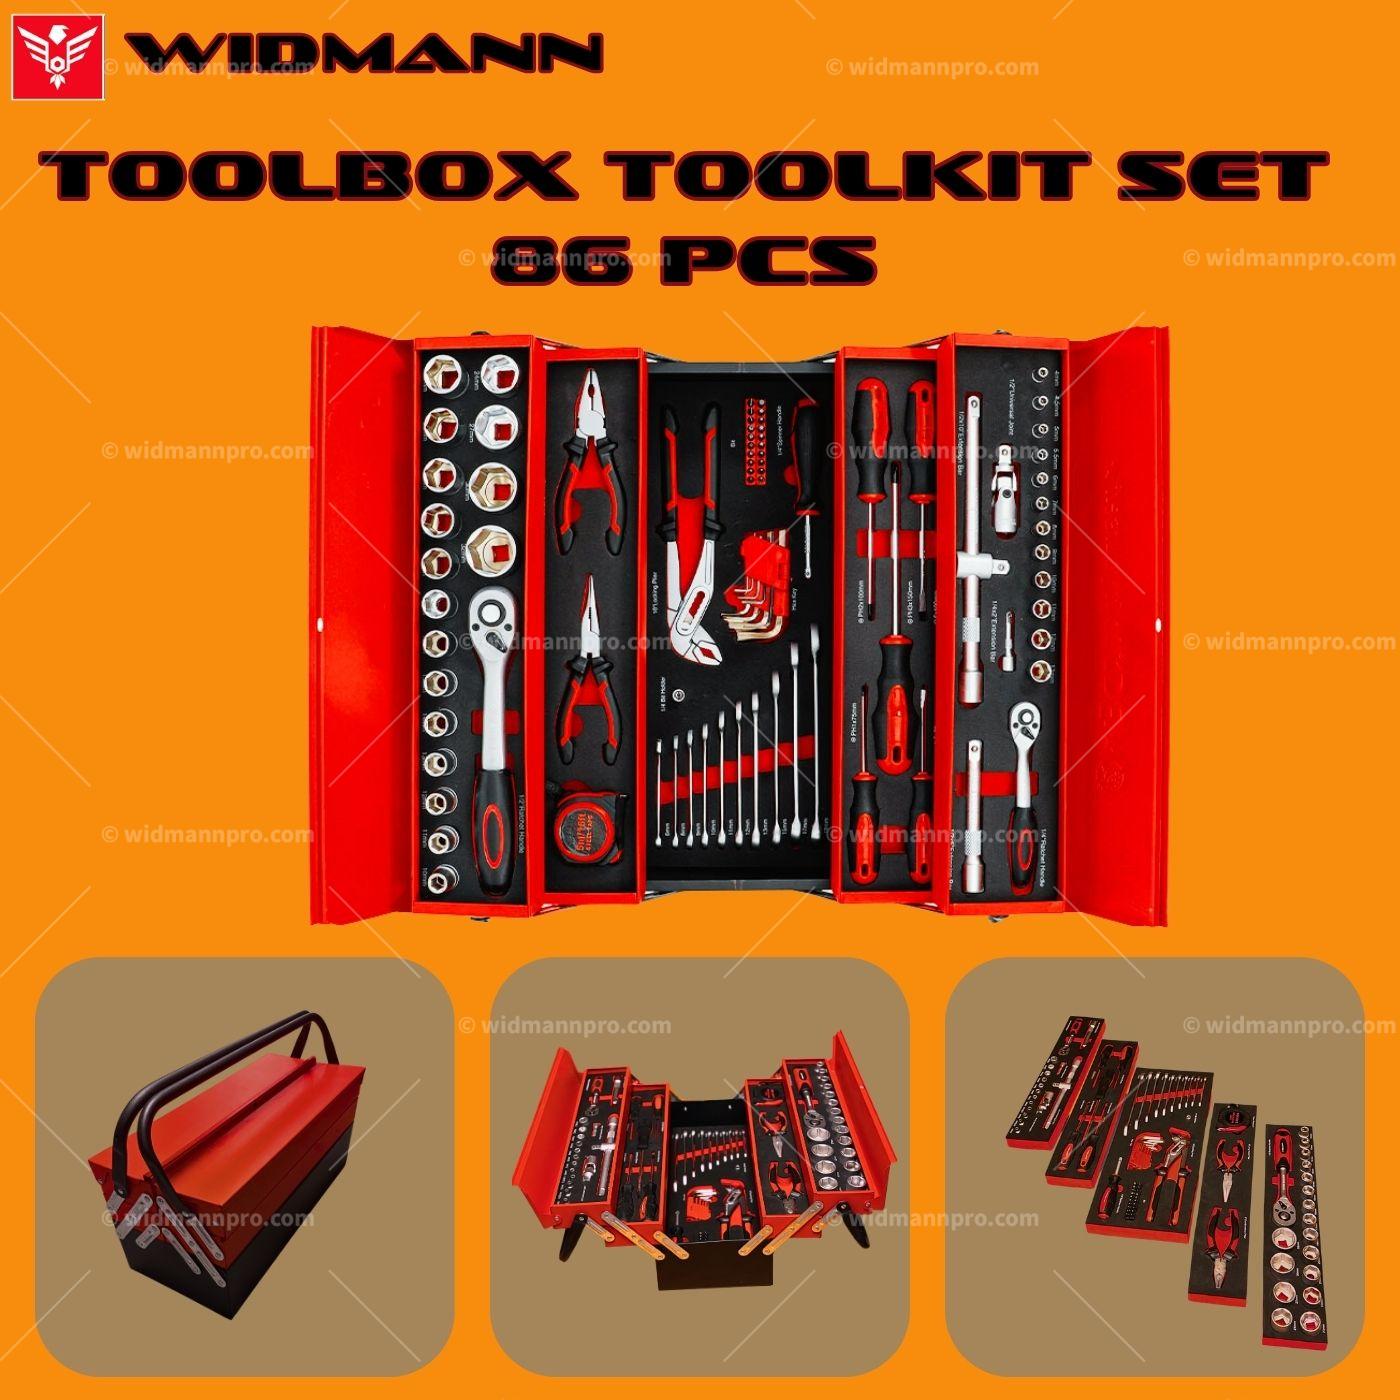 WIDMANN TOOLBOX 86PCS WM-86 (2)